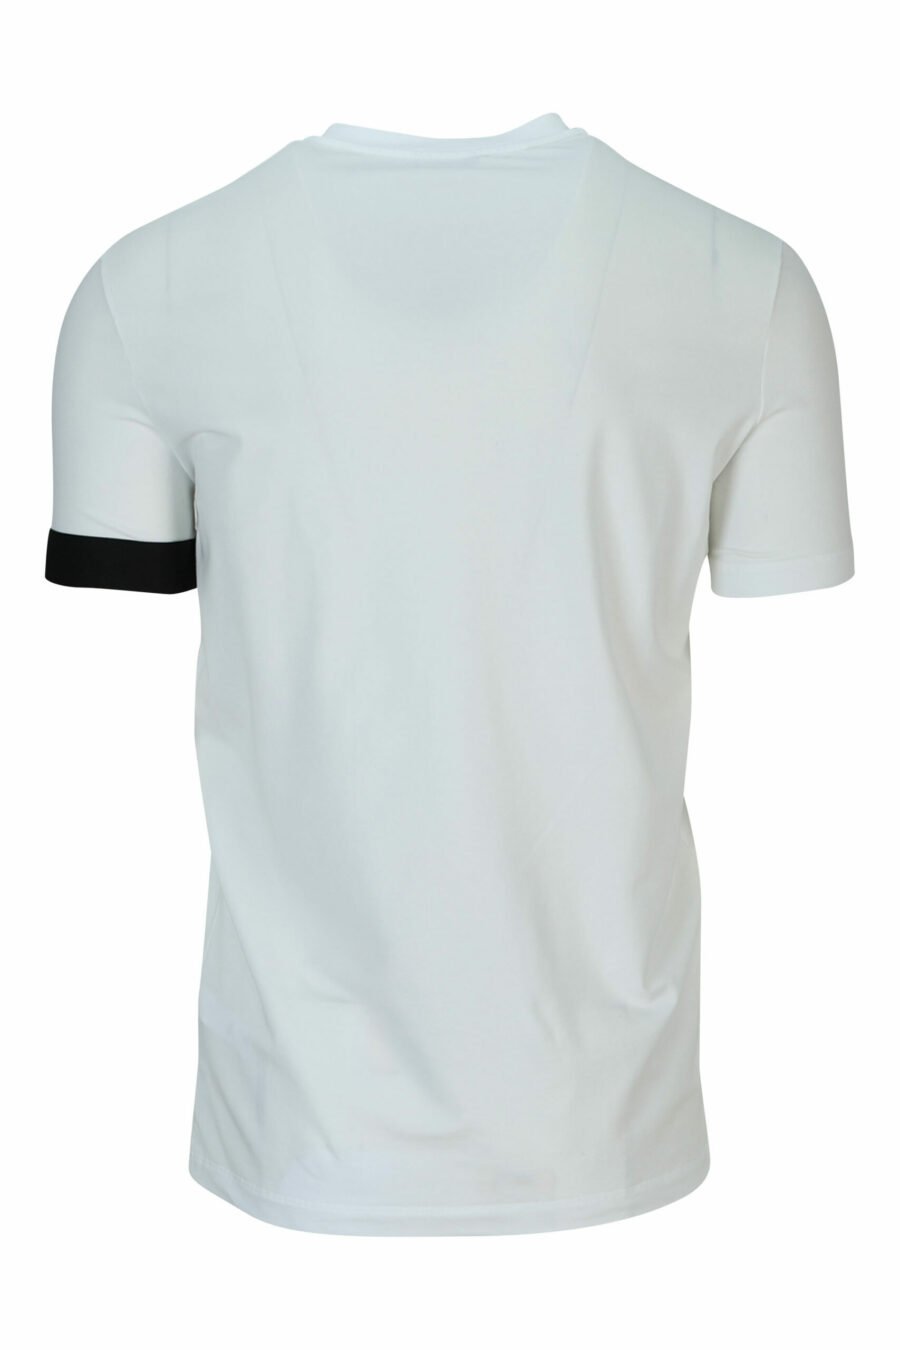 White T-shirt with black logo - 8032674767493 2 scaled